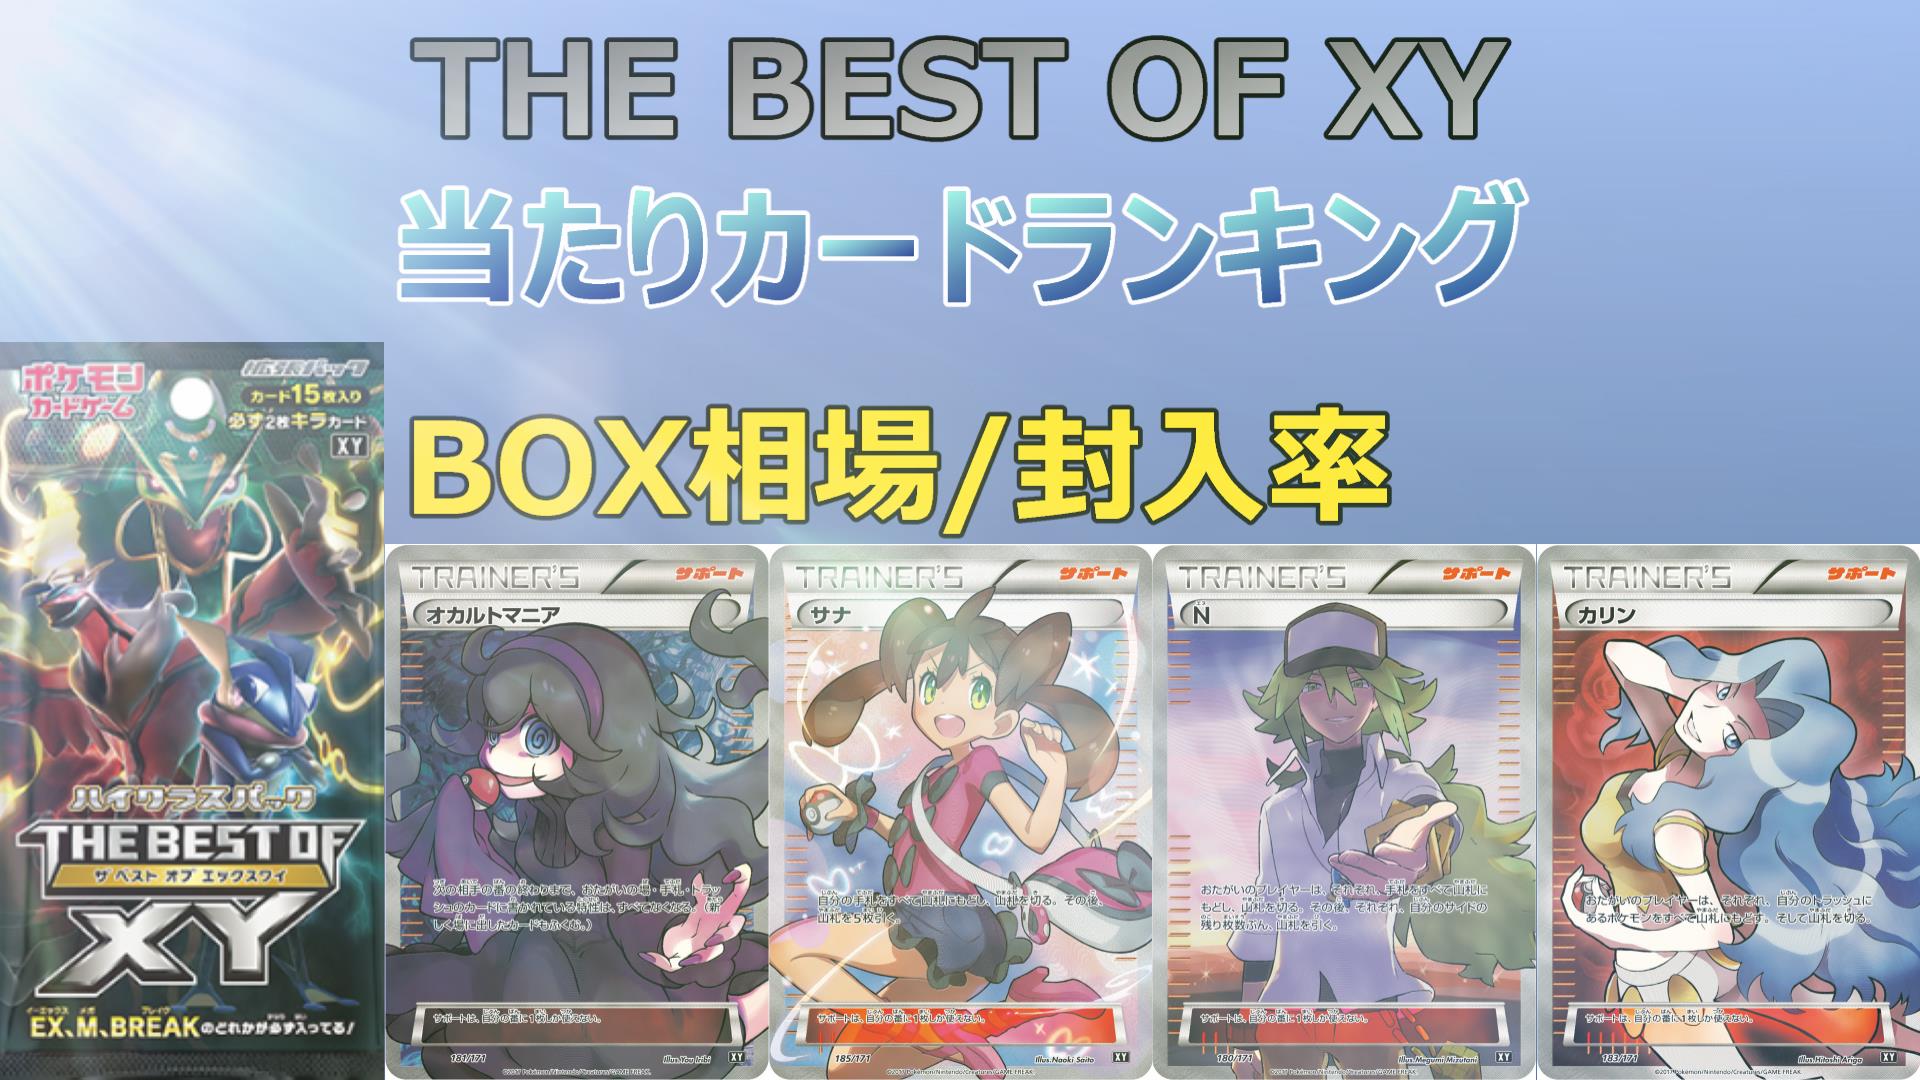 THE BEST OF XYの当たりカード/買取価格/未開封BOX相場/封入率 - キリポケ